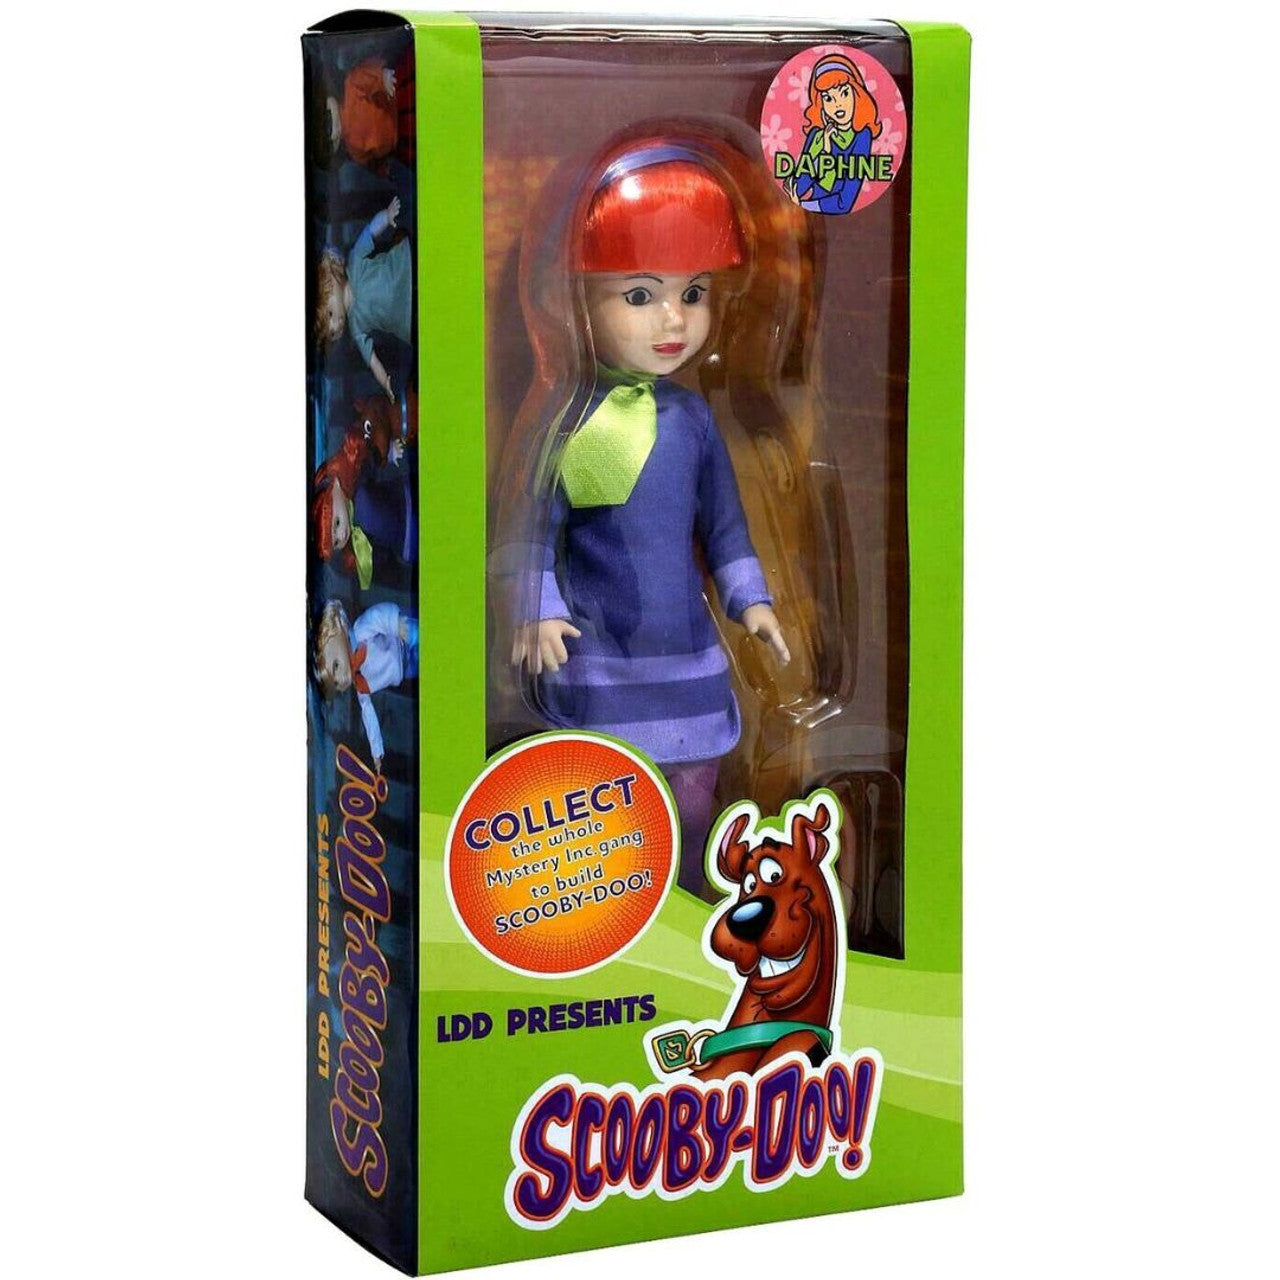 Scooby Doo Daphne Living Dead Doll